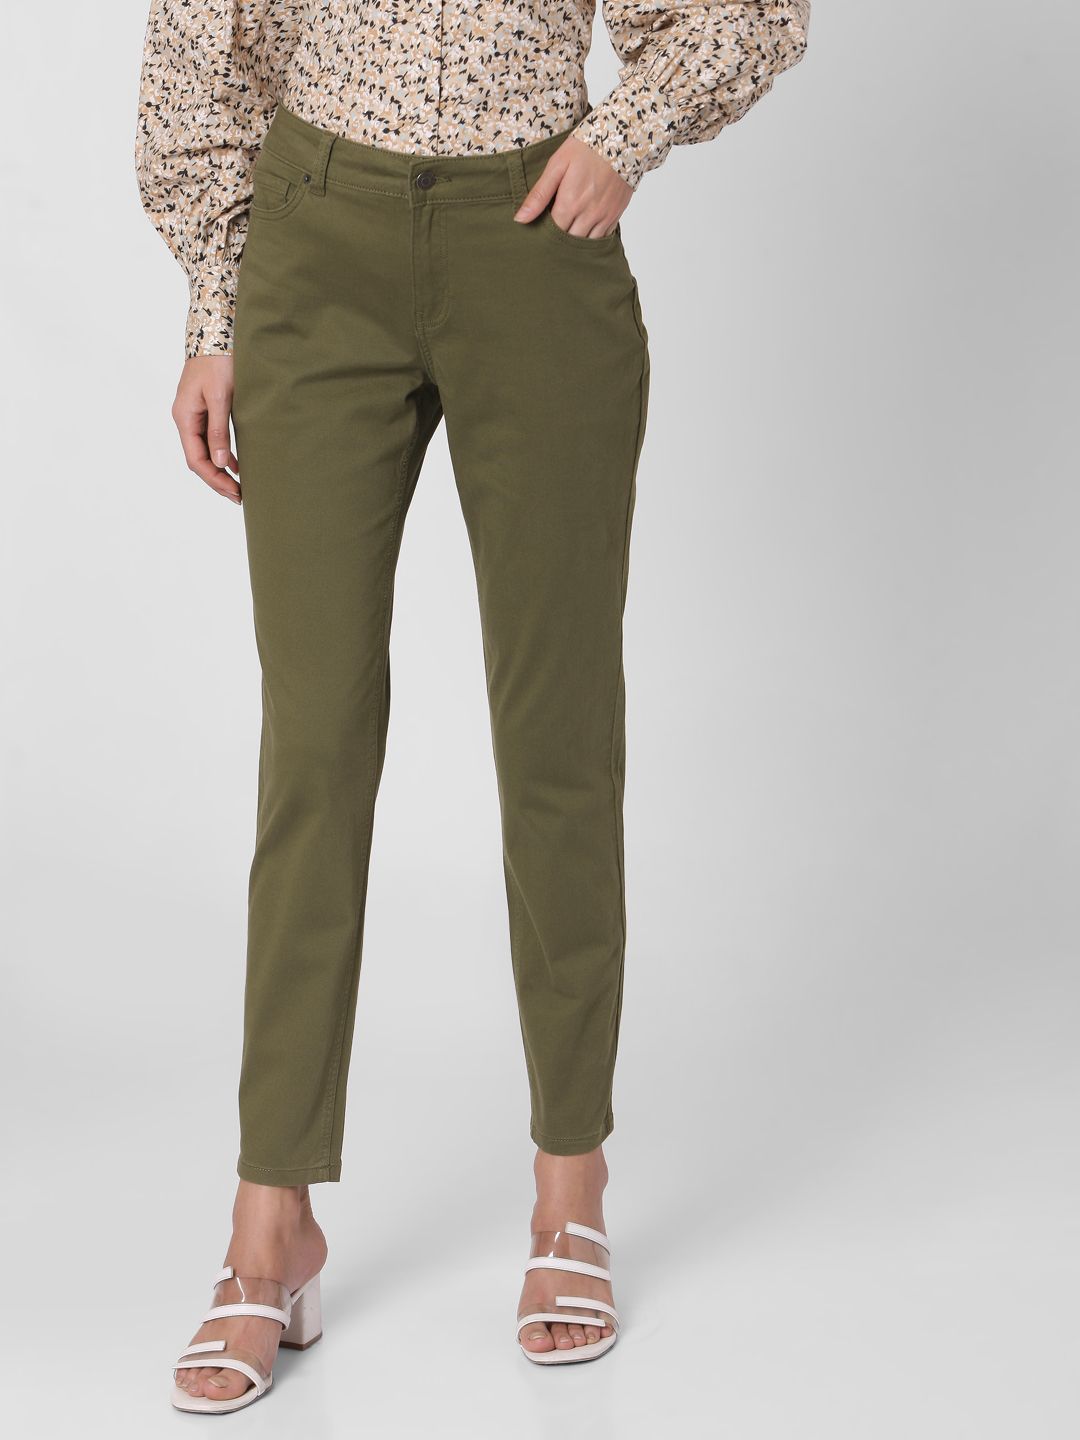 Vero Moda Women Olive Green Skinny Fit Solid Cigarette Trousers Price in India